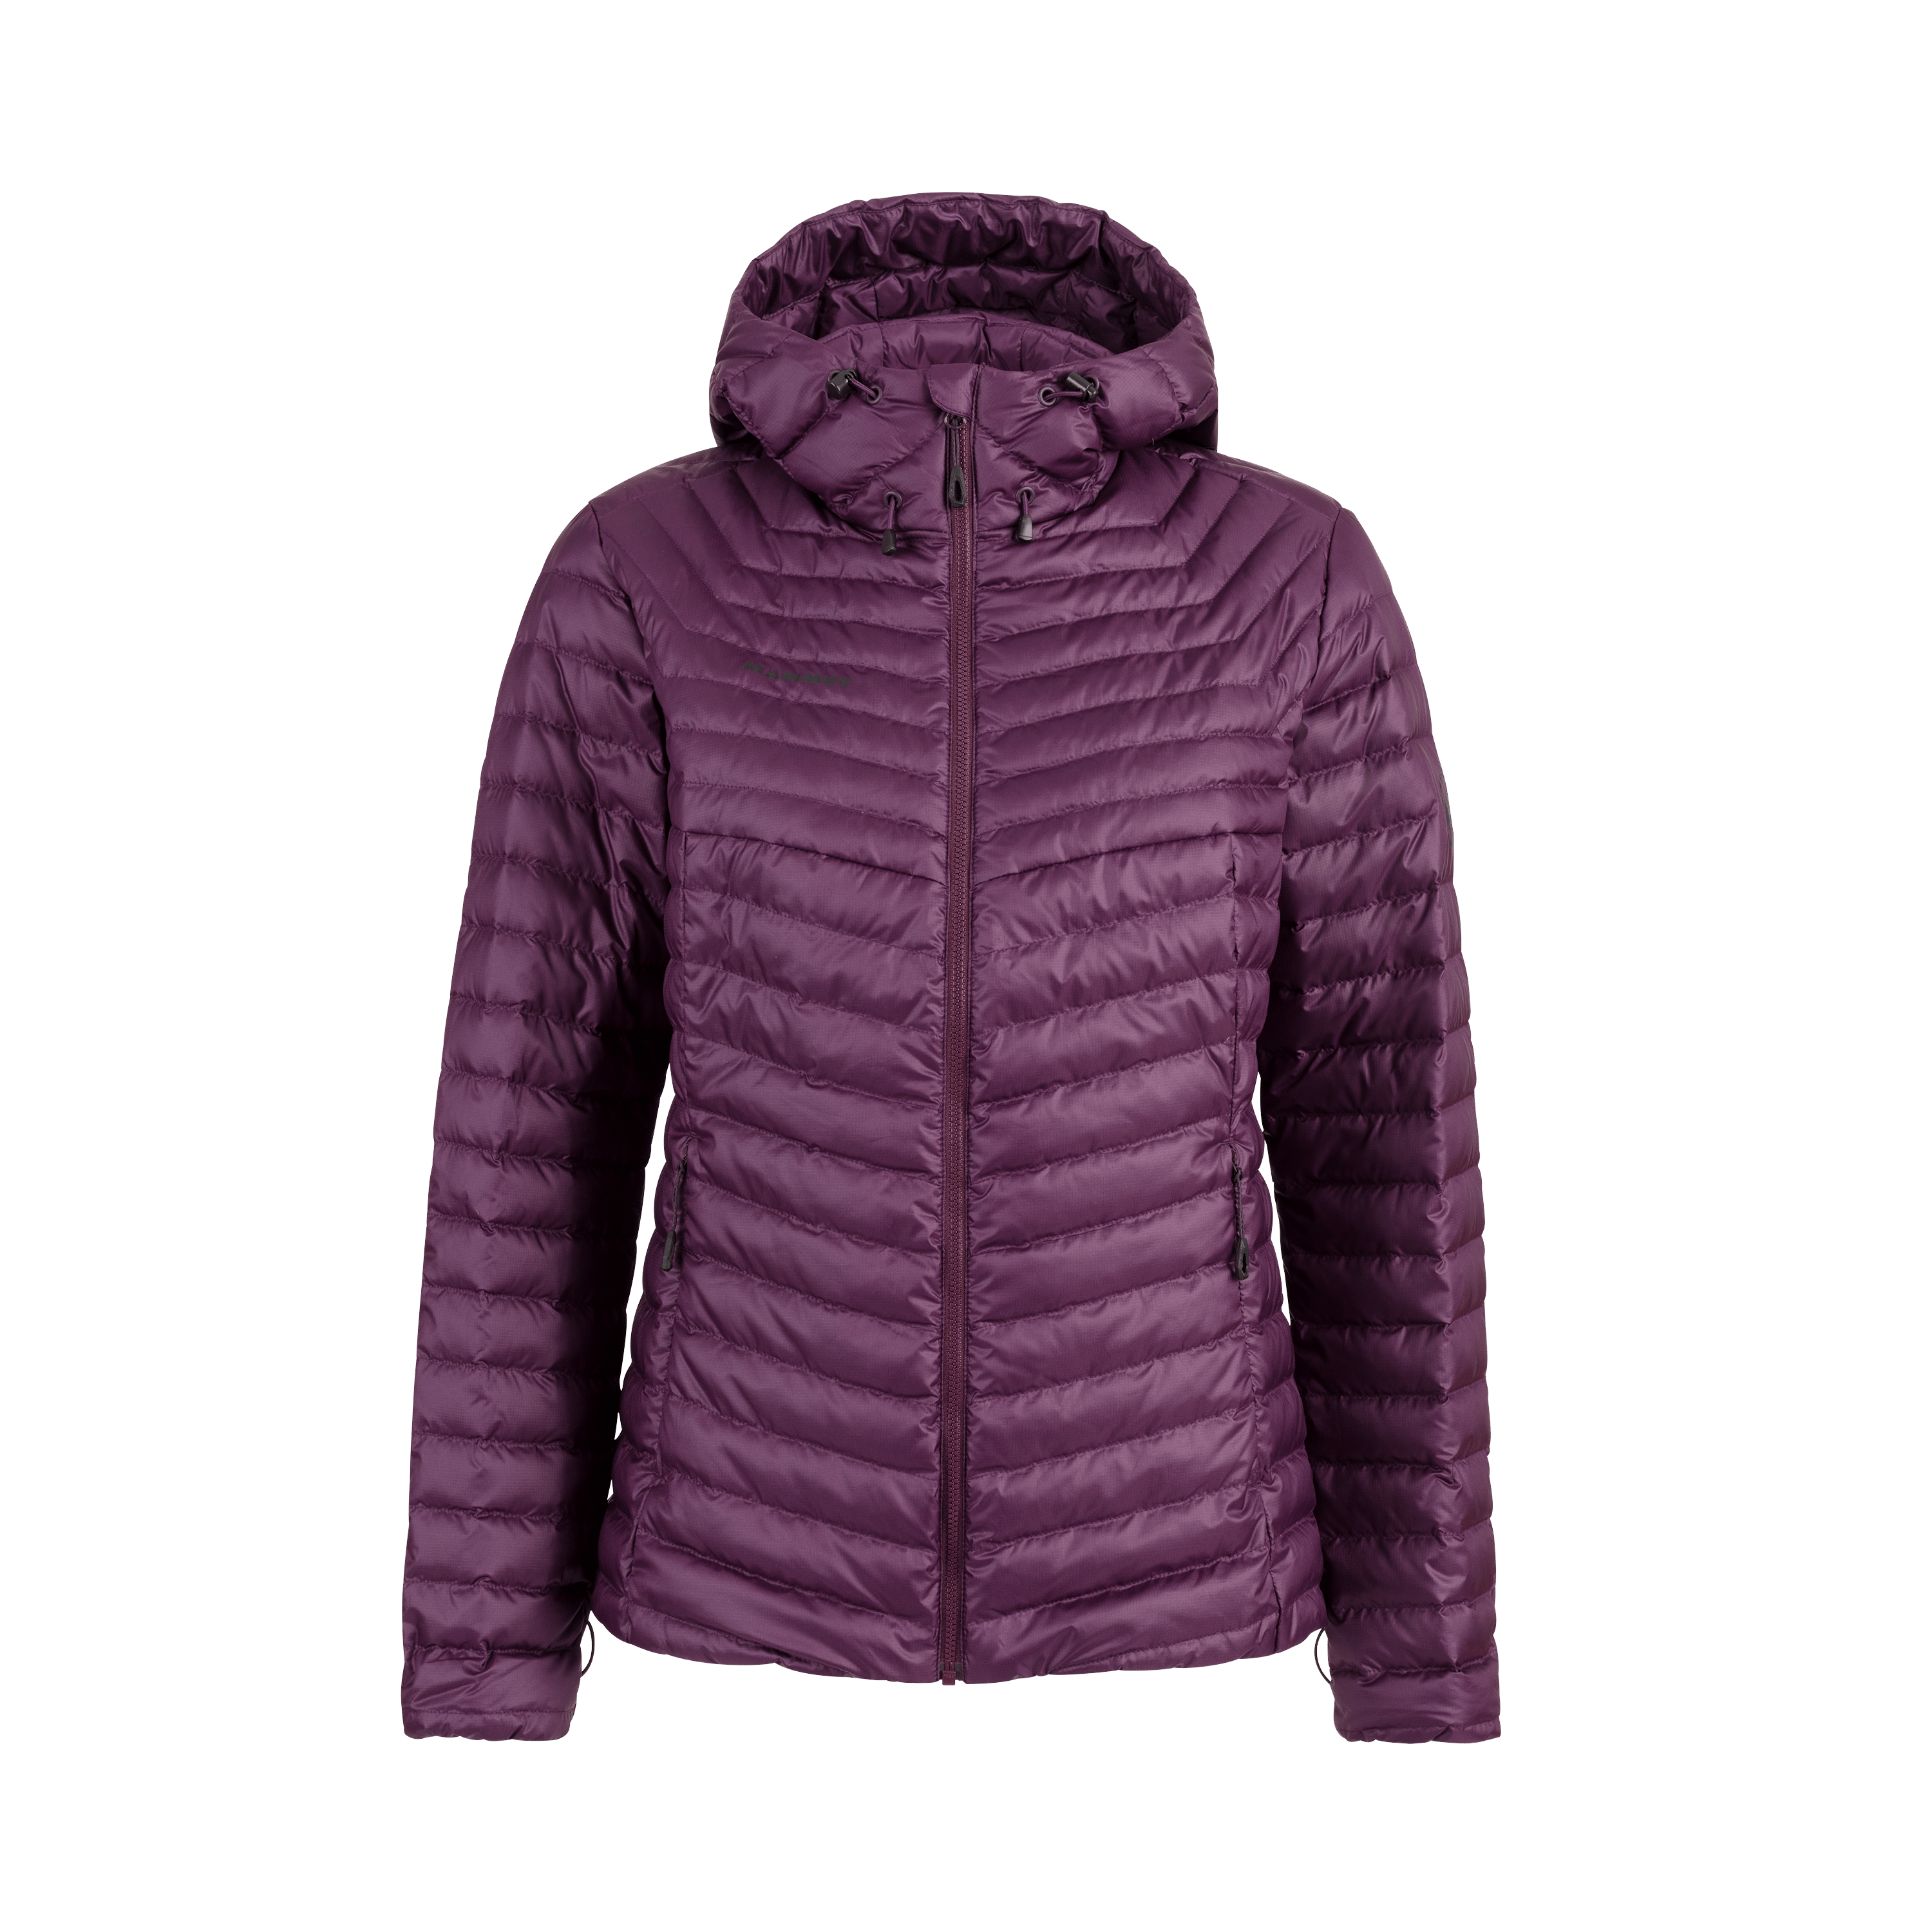 Convey IN Hooded Jacket Women - blackberry, XL thumbnail